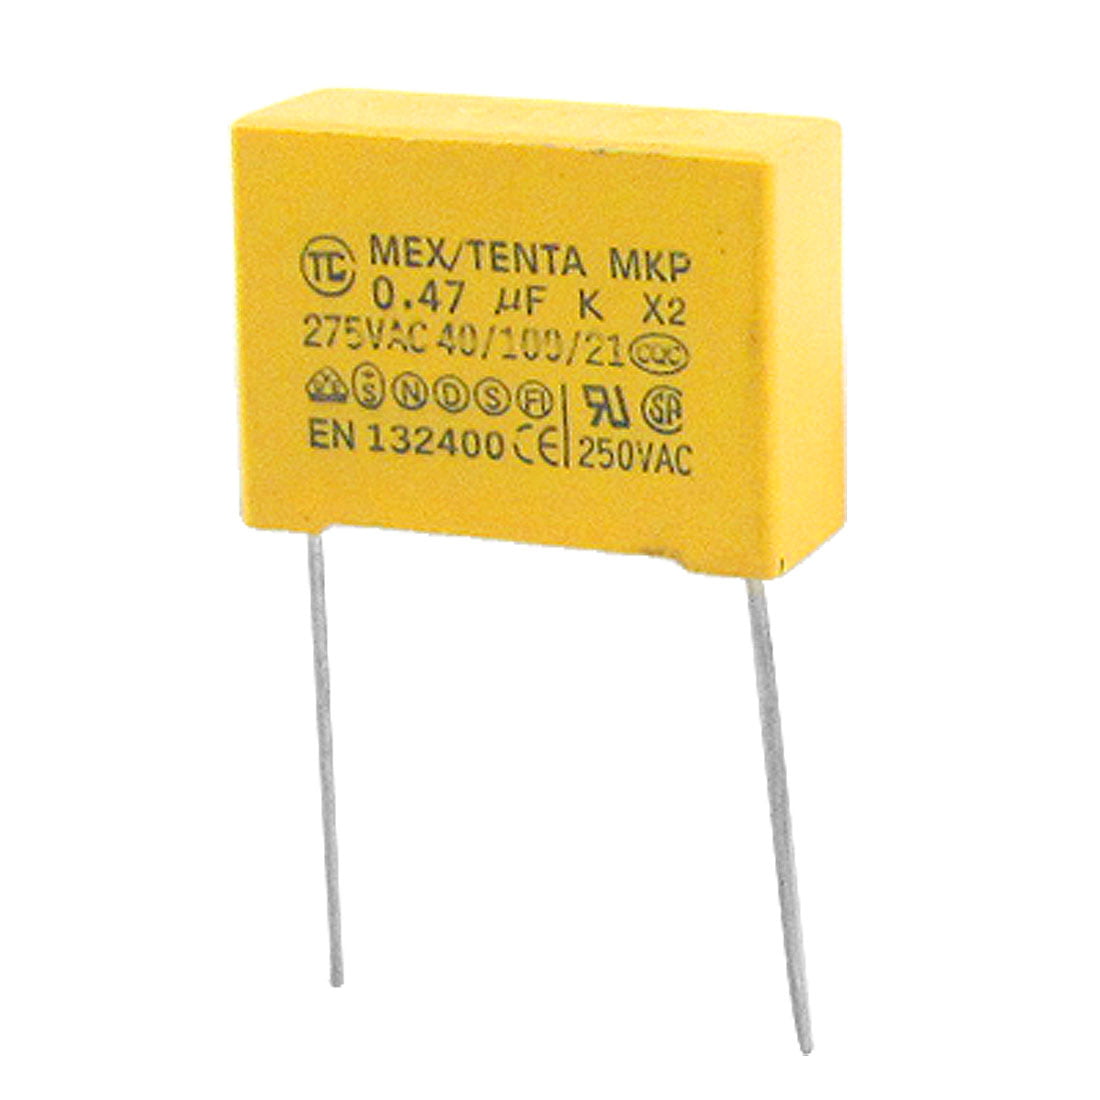 0.01uF 275VAC 250VAC-MEX/TENTA 40/100/21 MPX X2 sécurité la suppression des condensateurs 